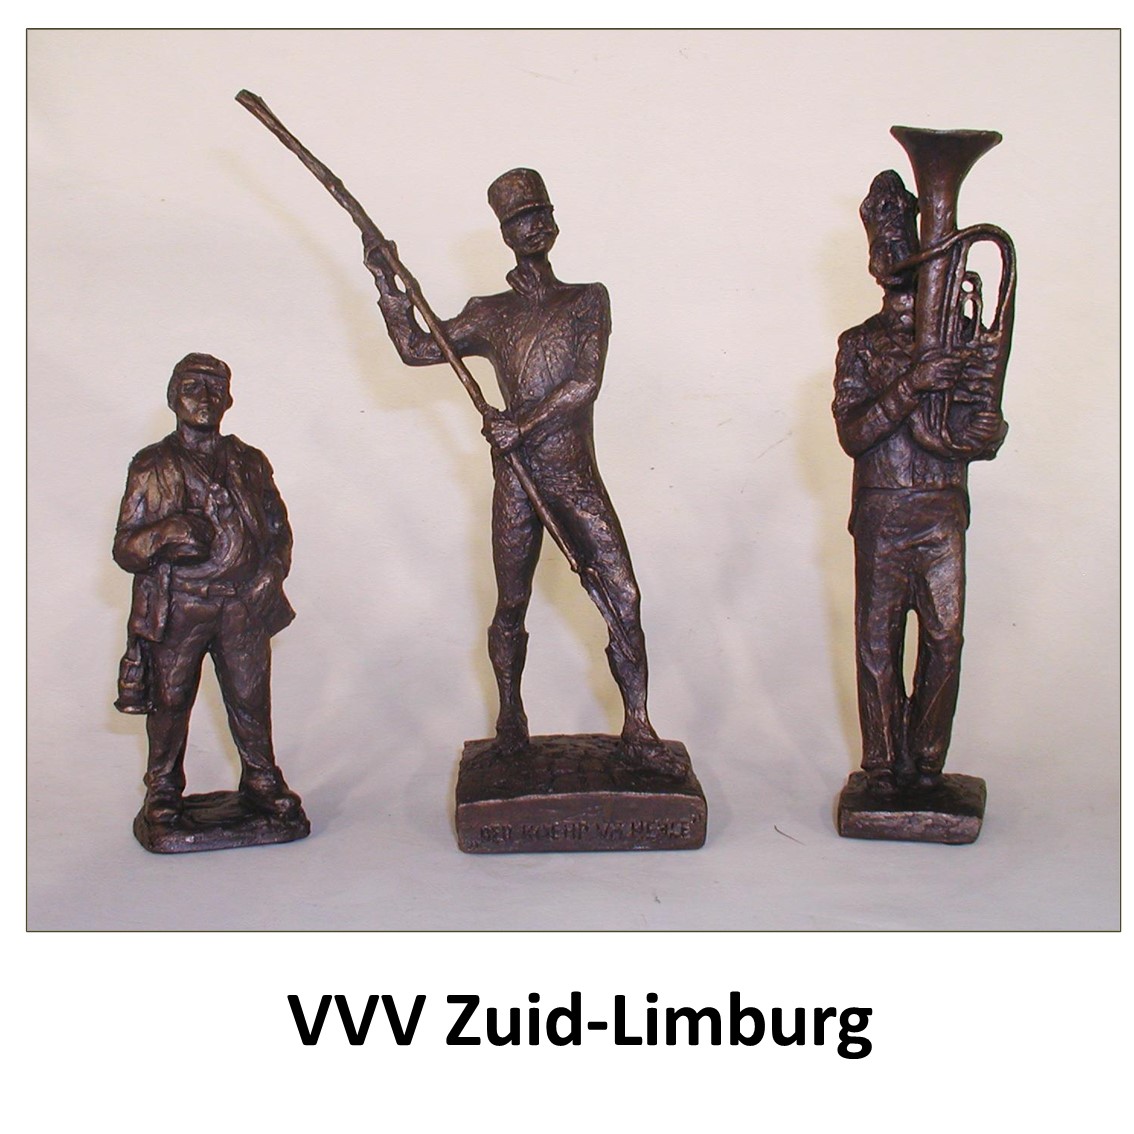 VVV Zuid-Limburg